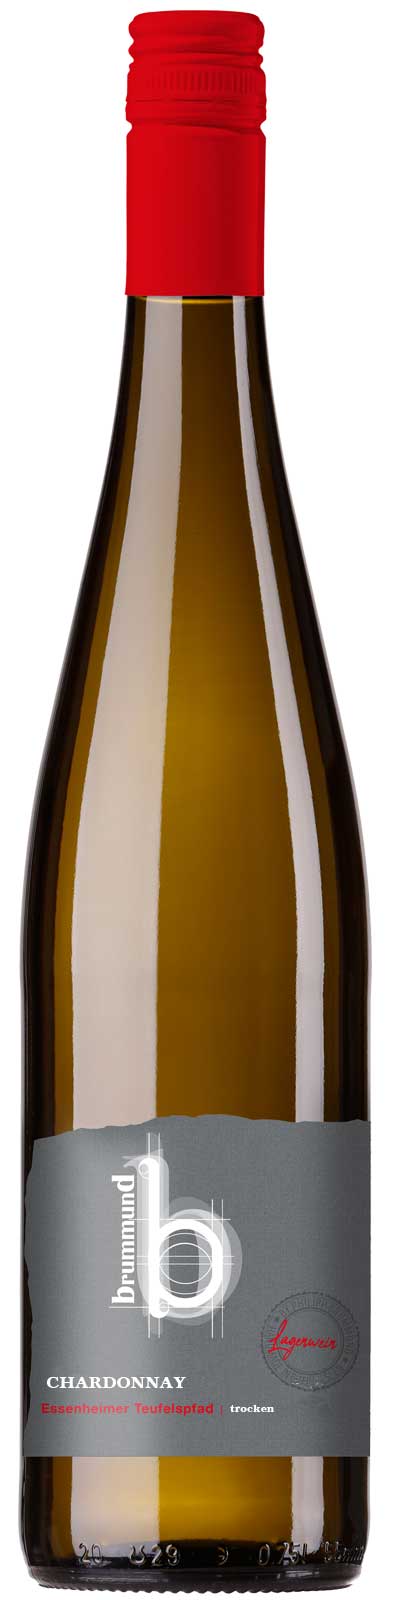 Essenheimer Teufelspfad Chardonnay trocken 2019 trocken | Lagenwein